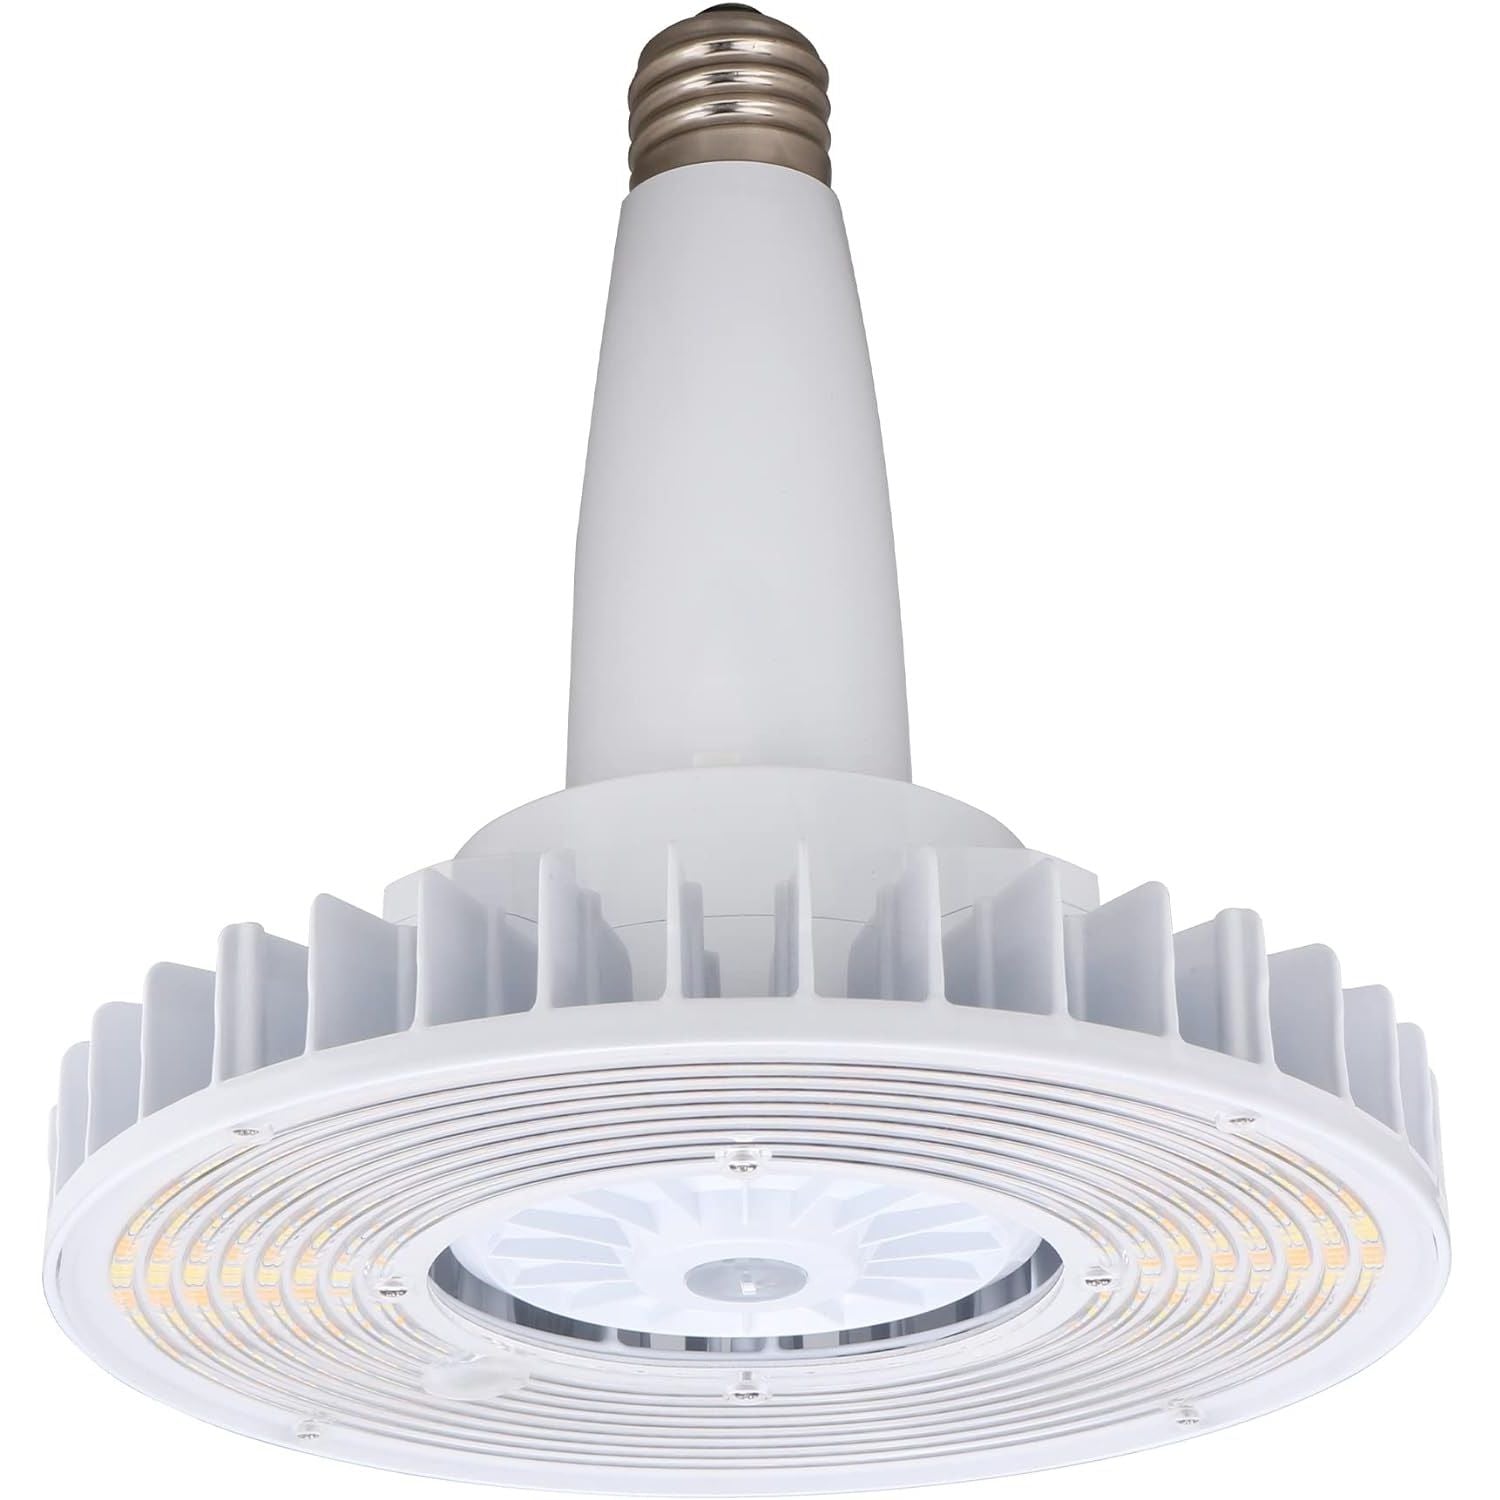 160W High Bay LED Light Bulb - 24800Lm 5700K, Mogul Base E39 LED Bulb, Compatible with Motion Sensor, UL Listed Dephen